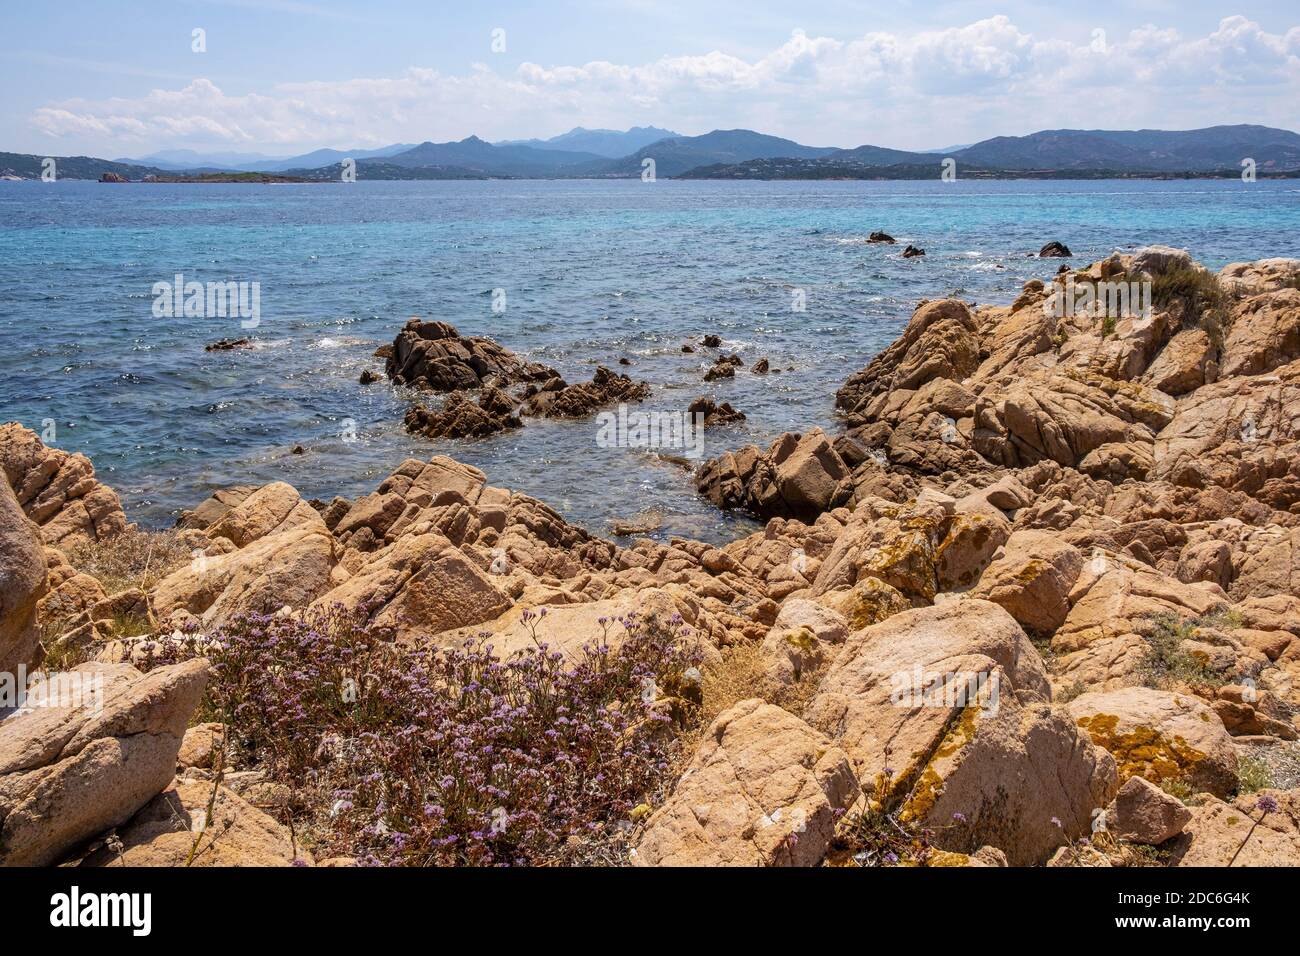 Panoramic view of Spalmatore di Terra peninsula of Marine Protected Area natural reserve with seashore rocks of Isola Tavolara island on Tyrrhenian Se Stock Photo